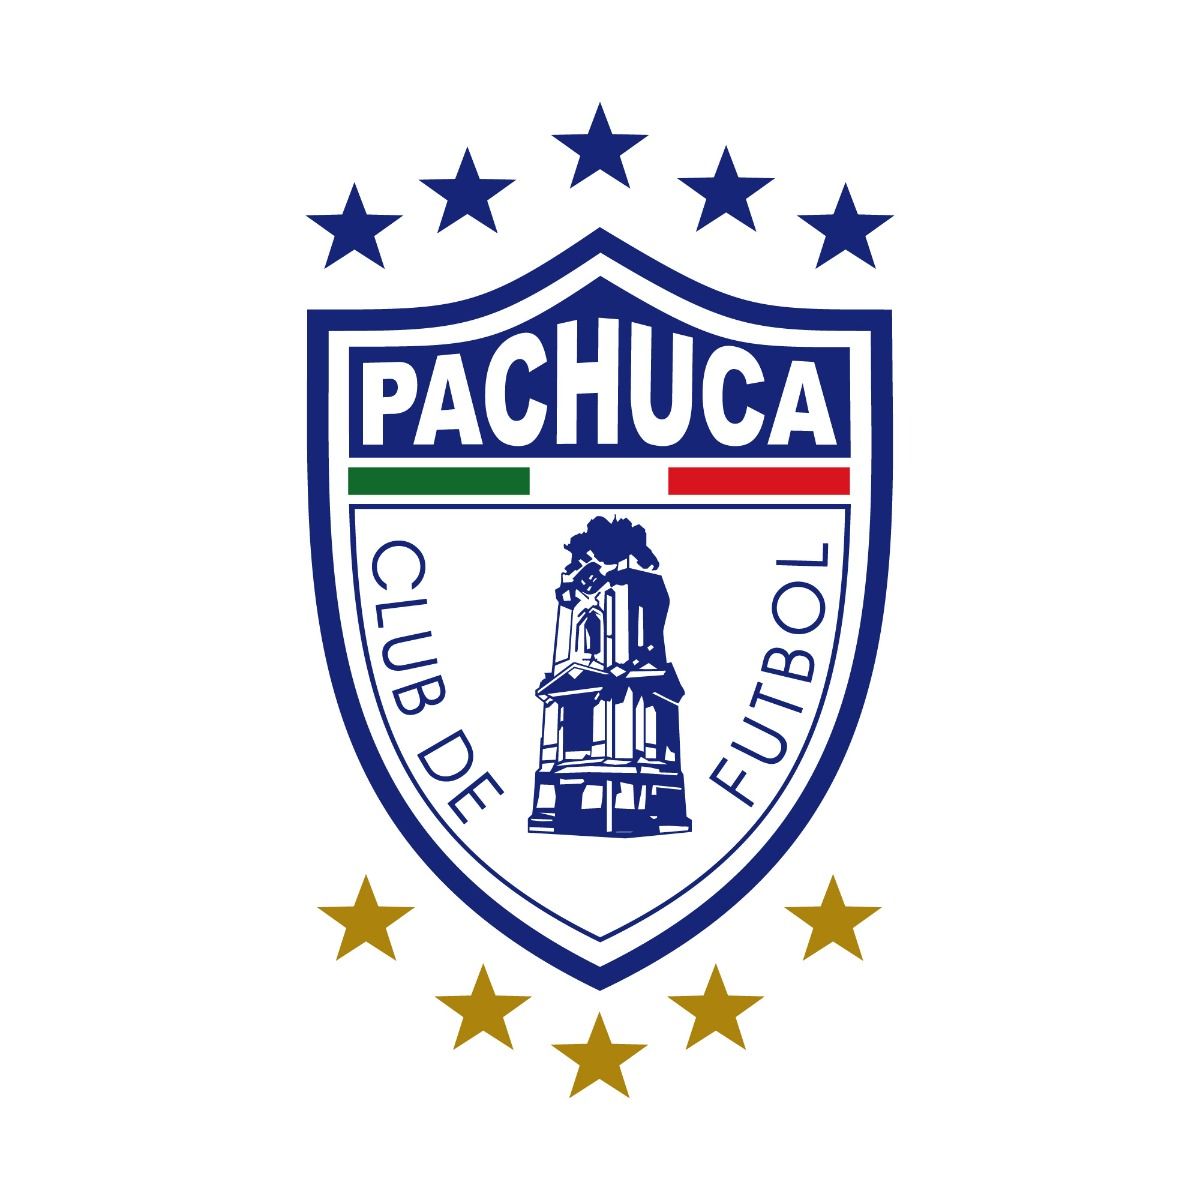 all mexican soccer team logos